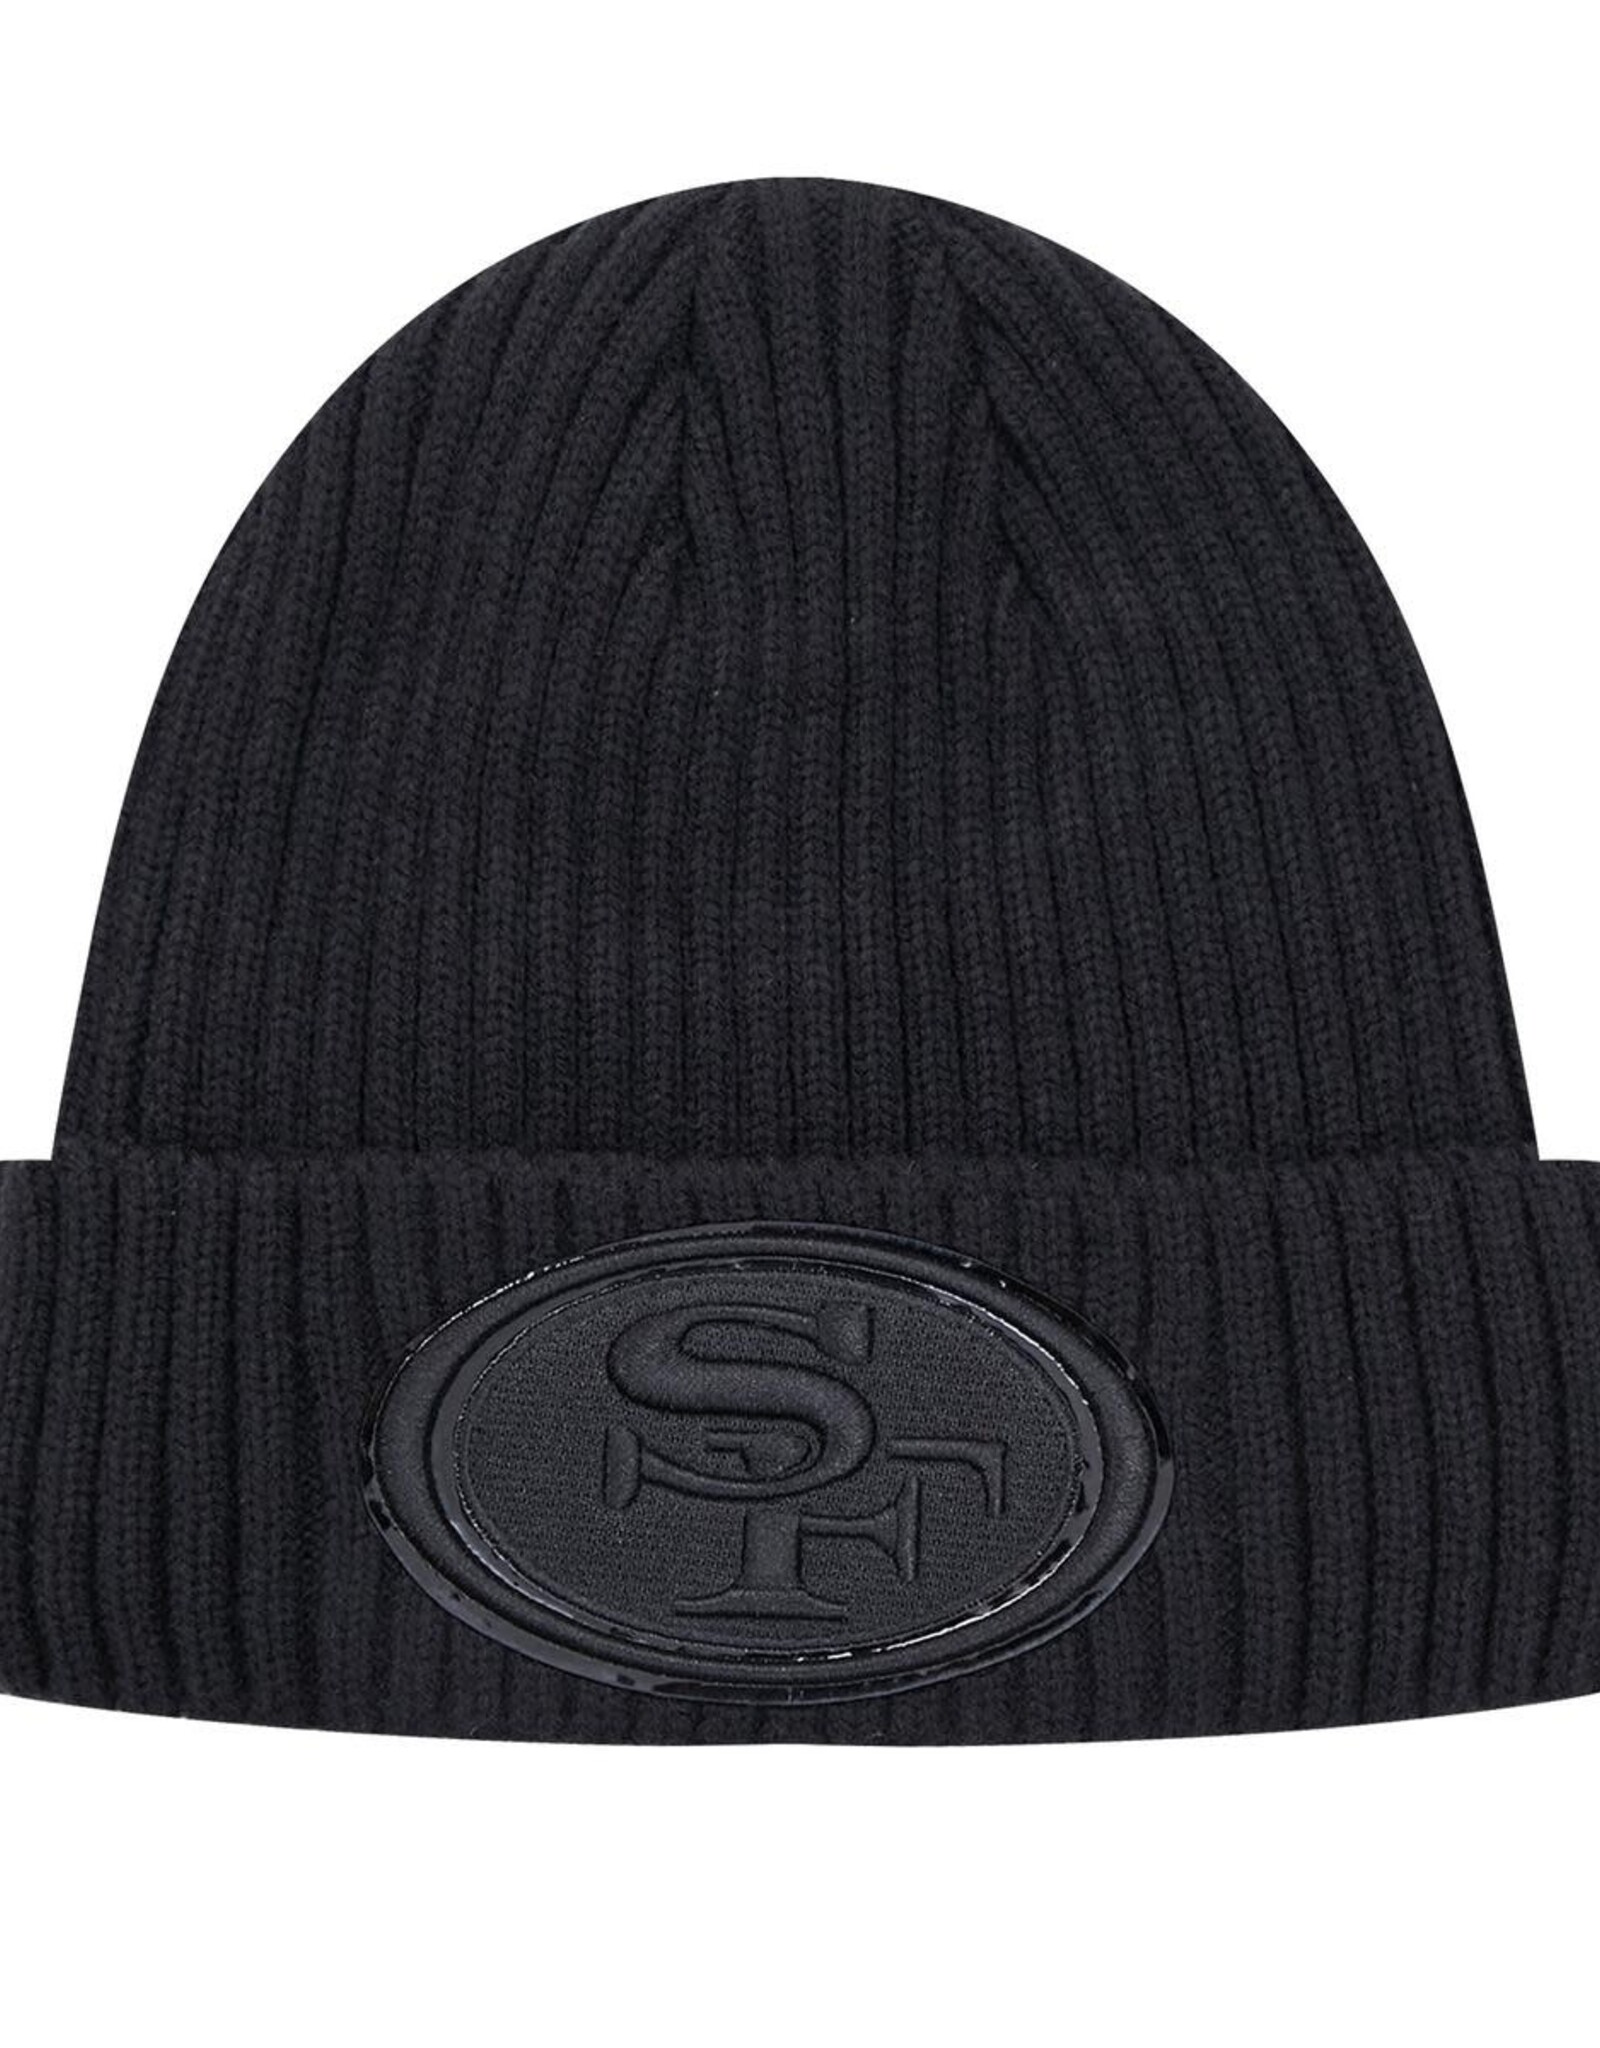 Pro Standard San Francisco 49ers Triple Black Knit Hat